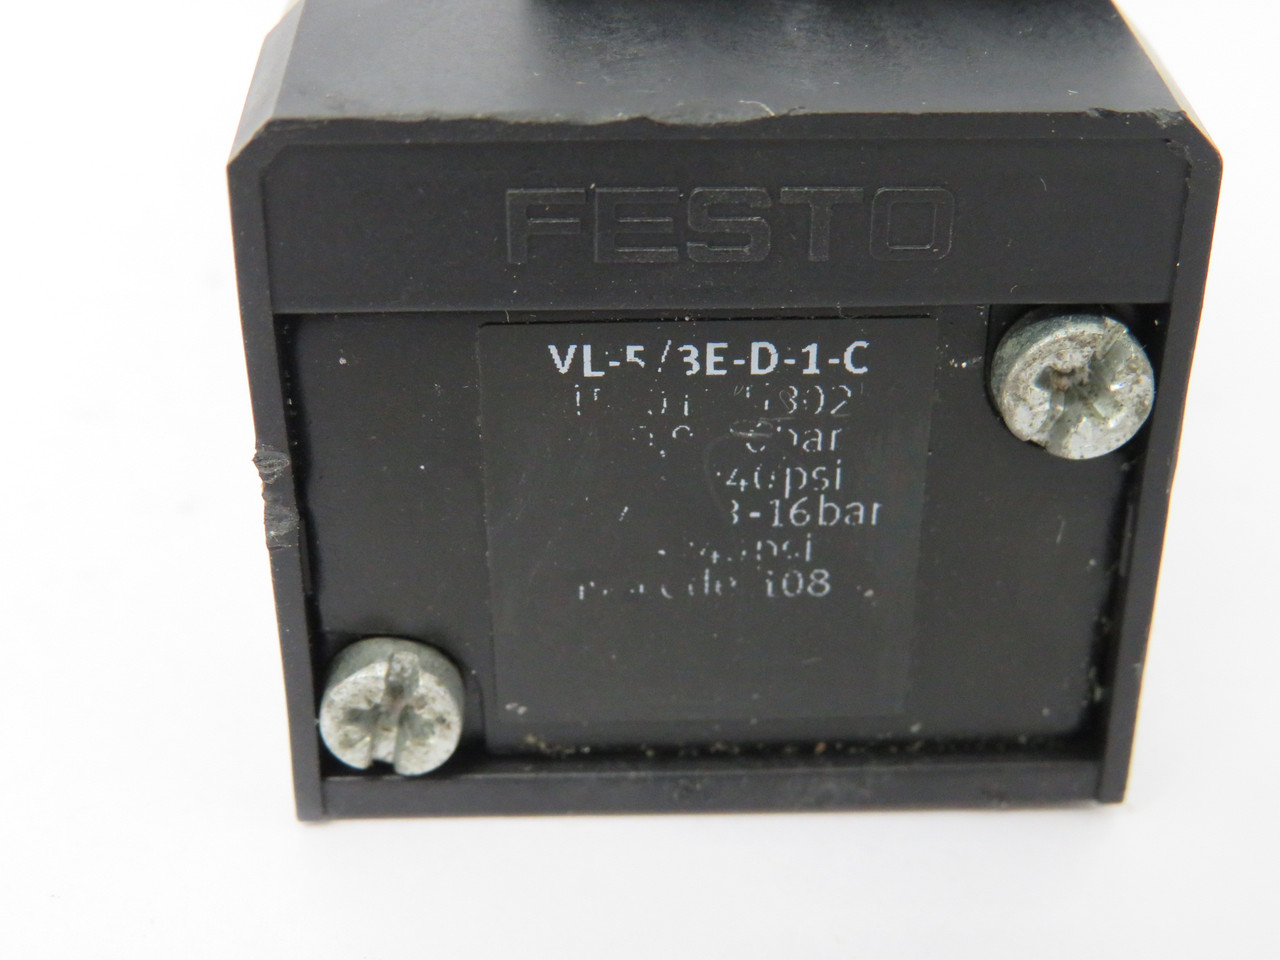 Festo 151011 VL-5/3E-D-1-C 5/3 Pneumatic Valve 1200l/min 3-16 bar *COS DMG* USED